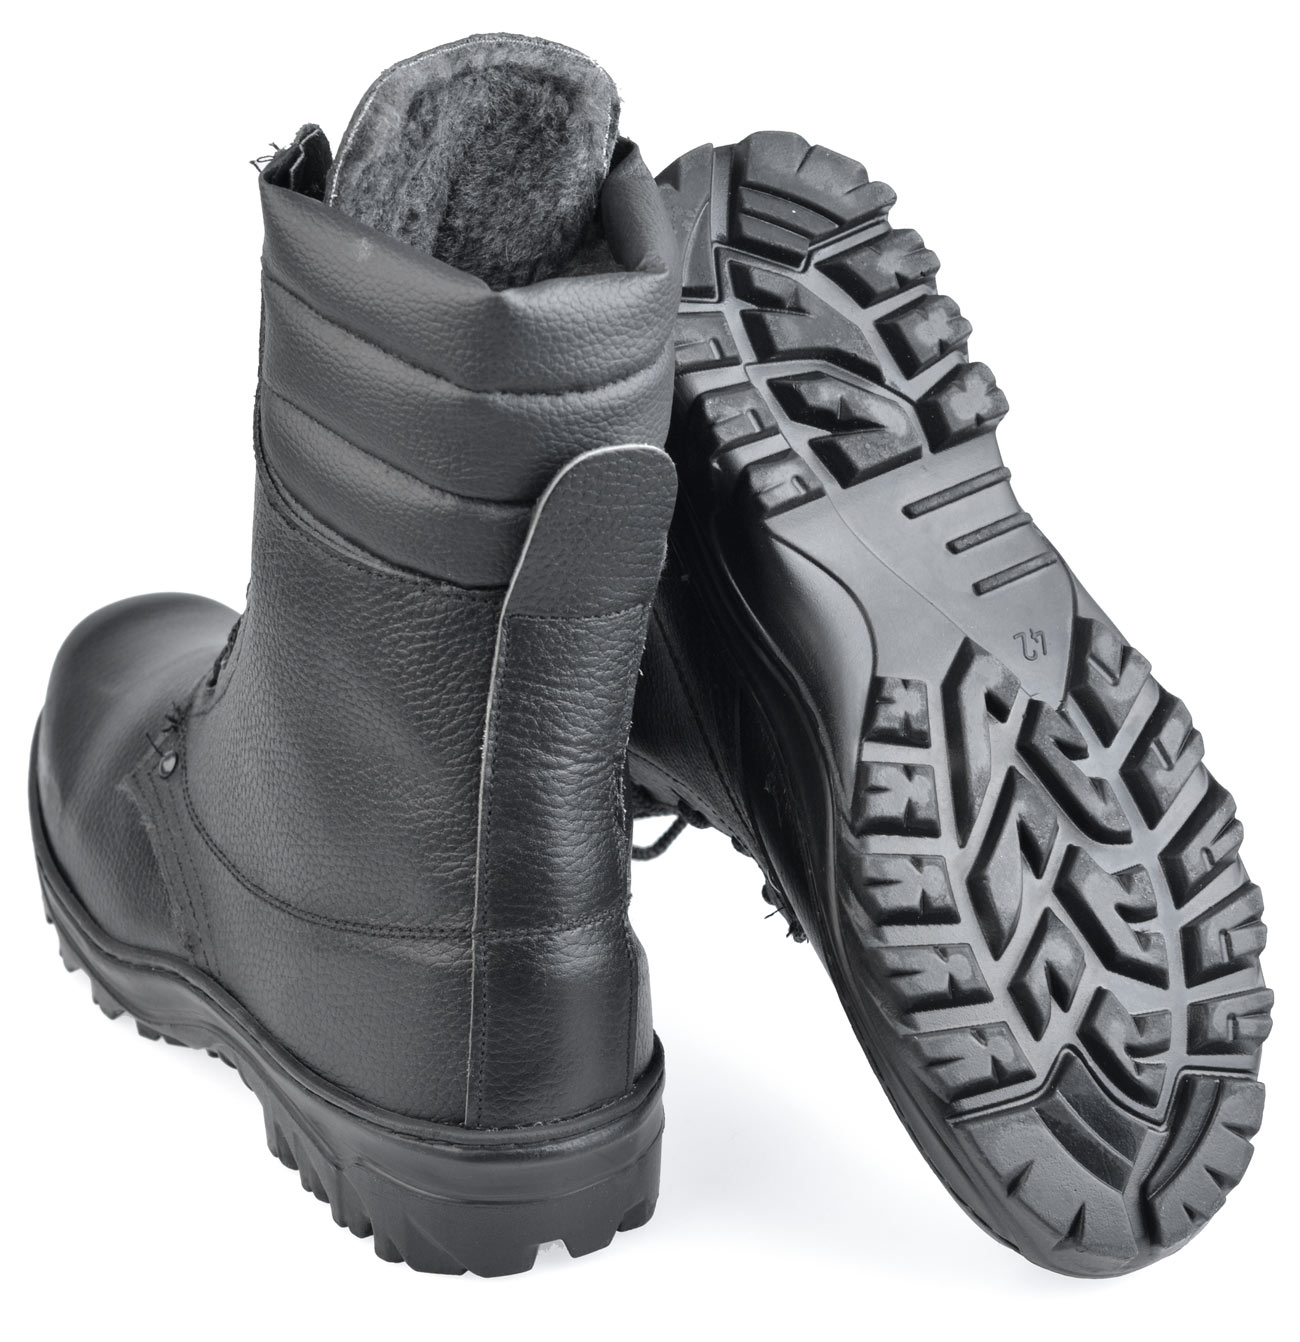 Ботинки с высоким берцем  "Ратник-Зима" на шерстяном меху, подошва резина (в уп. 8 пар)